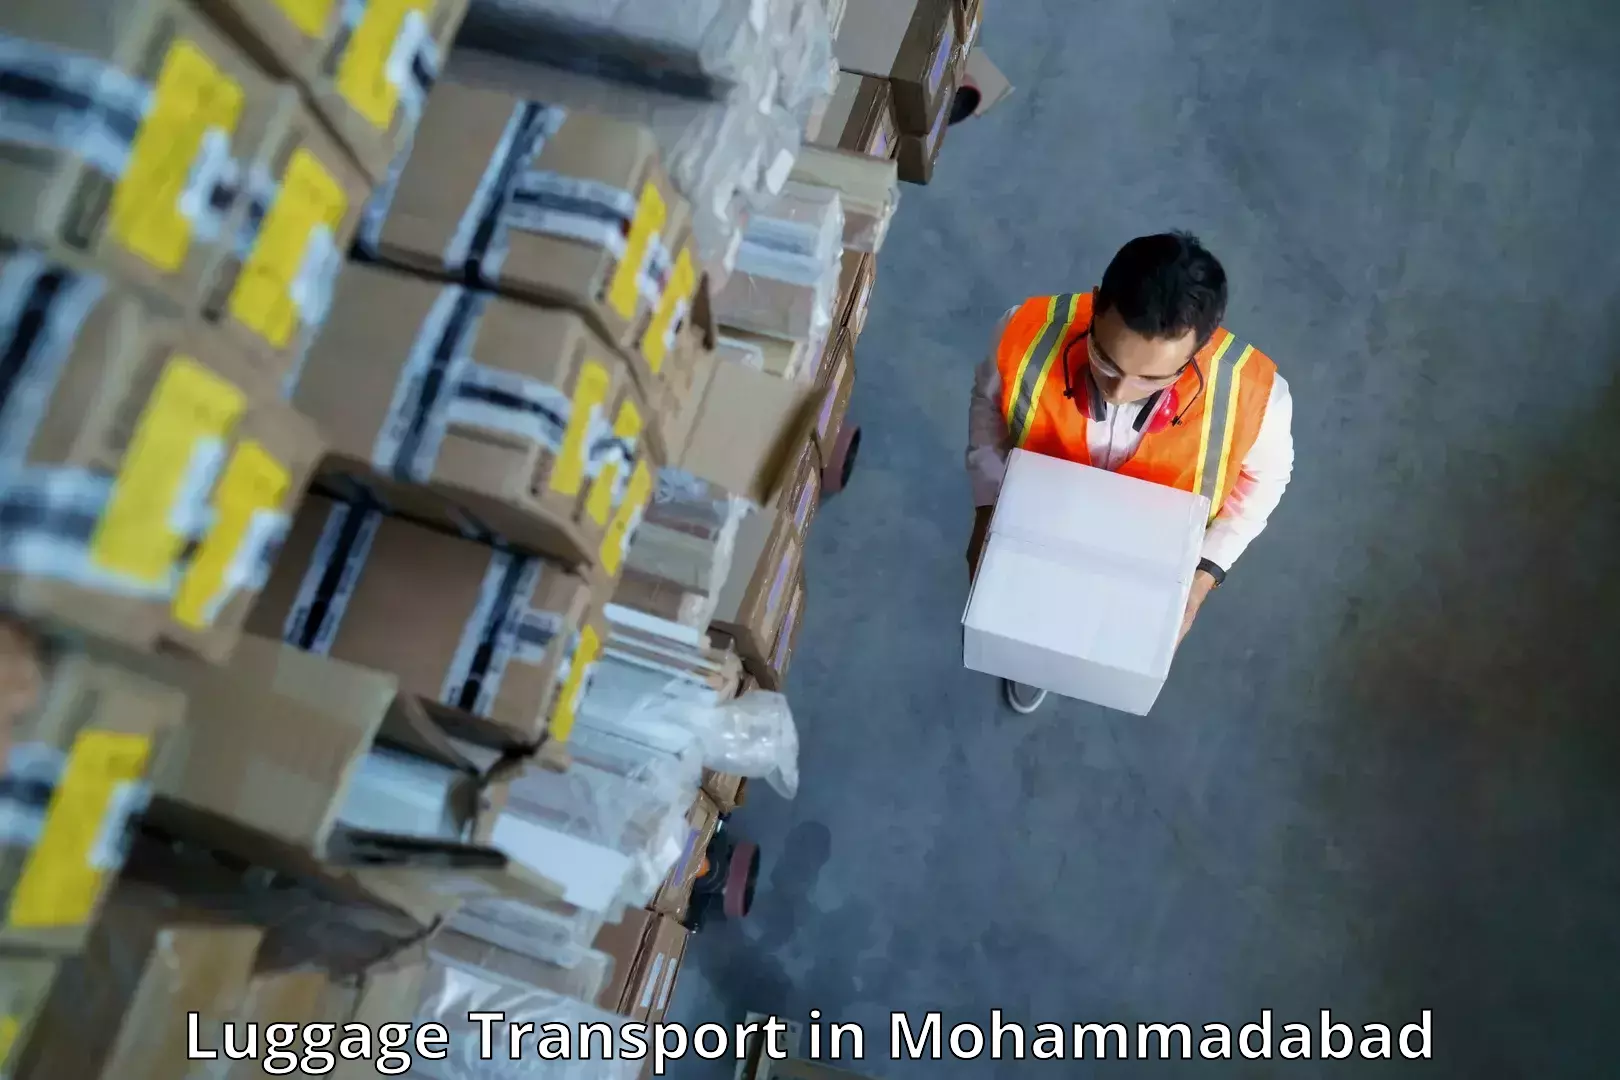 Luggage shipment tracking in Mohammadabad